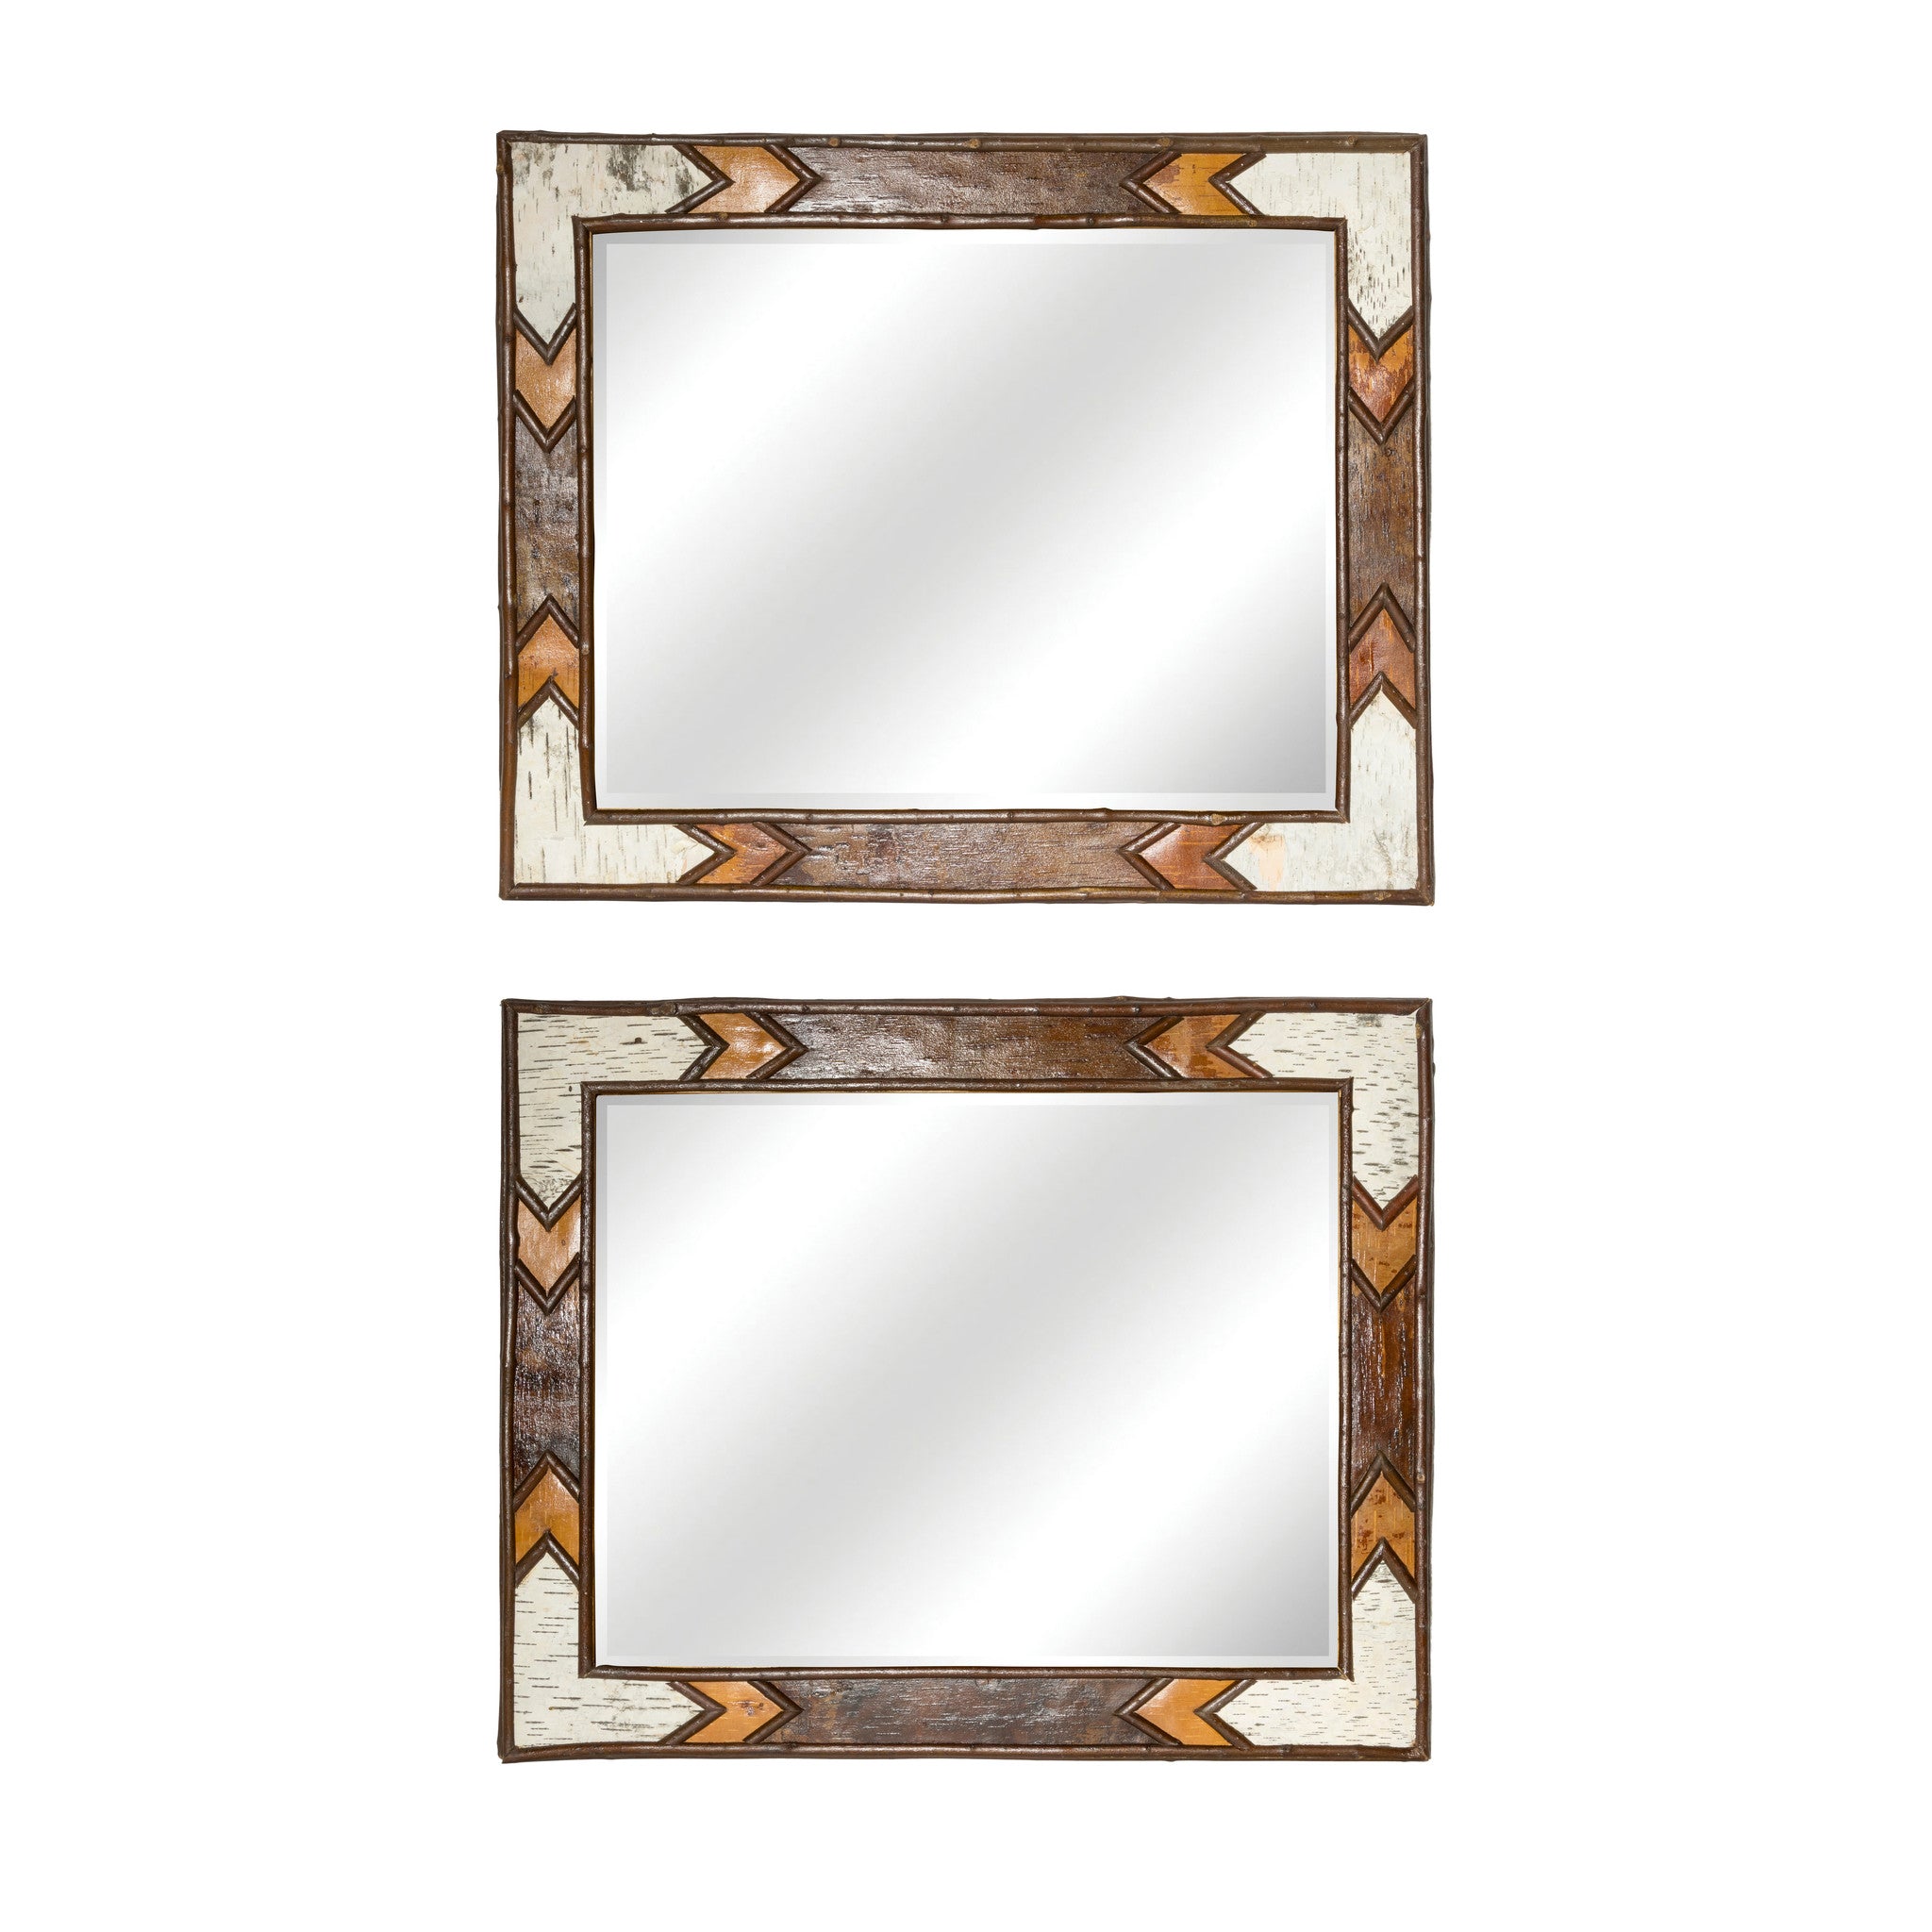 Pair Cisco's Adirondack Mirrors, Furnishings, Decor, Mirror